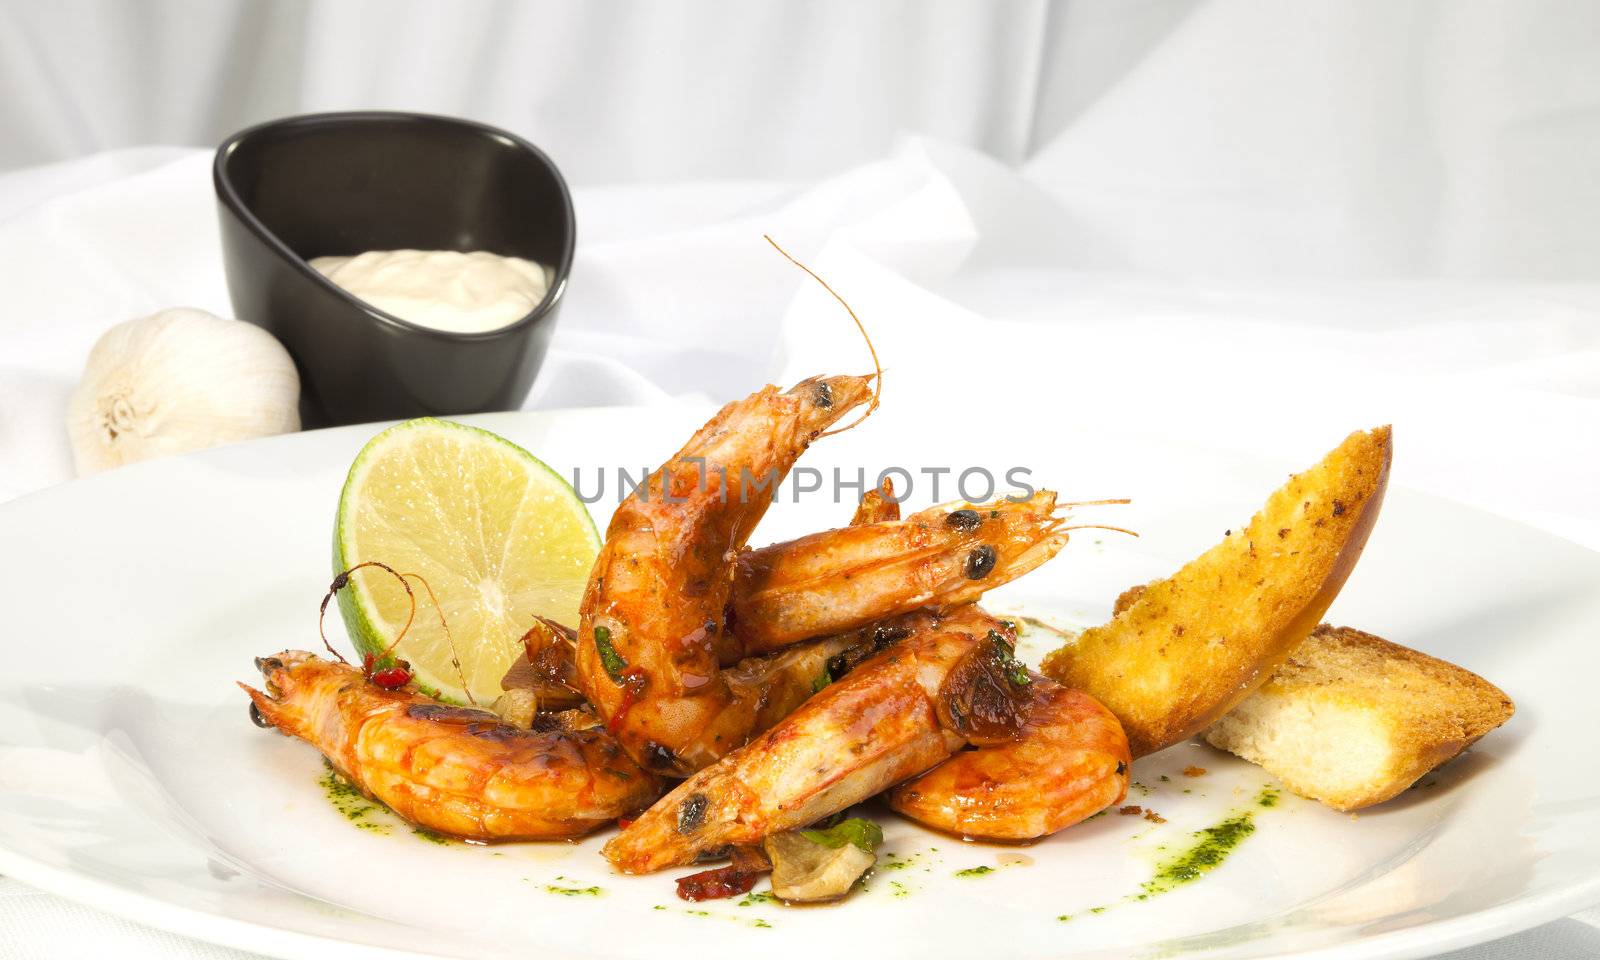 Shrimps prepared with garlic, chilli, white wine and balsamic vinegar